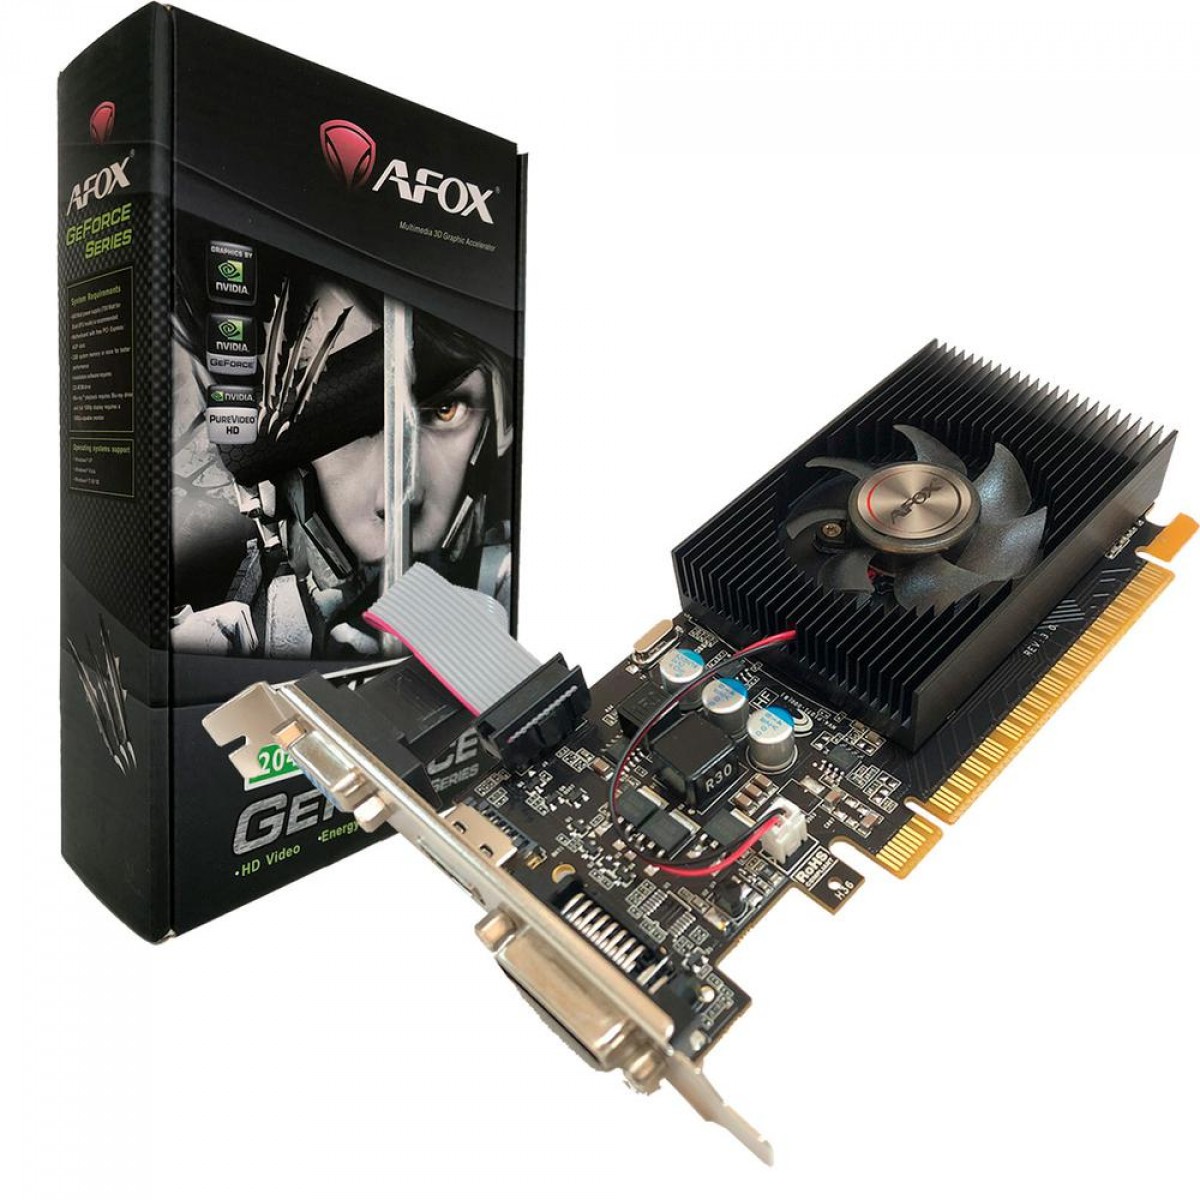 Placa de Vídeo AFox GeForce GT 420, 2GB, GDDR3, 128bit, AF420-2048D3L5